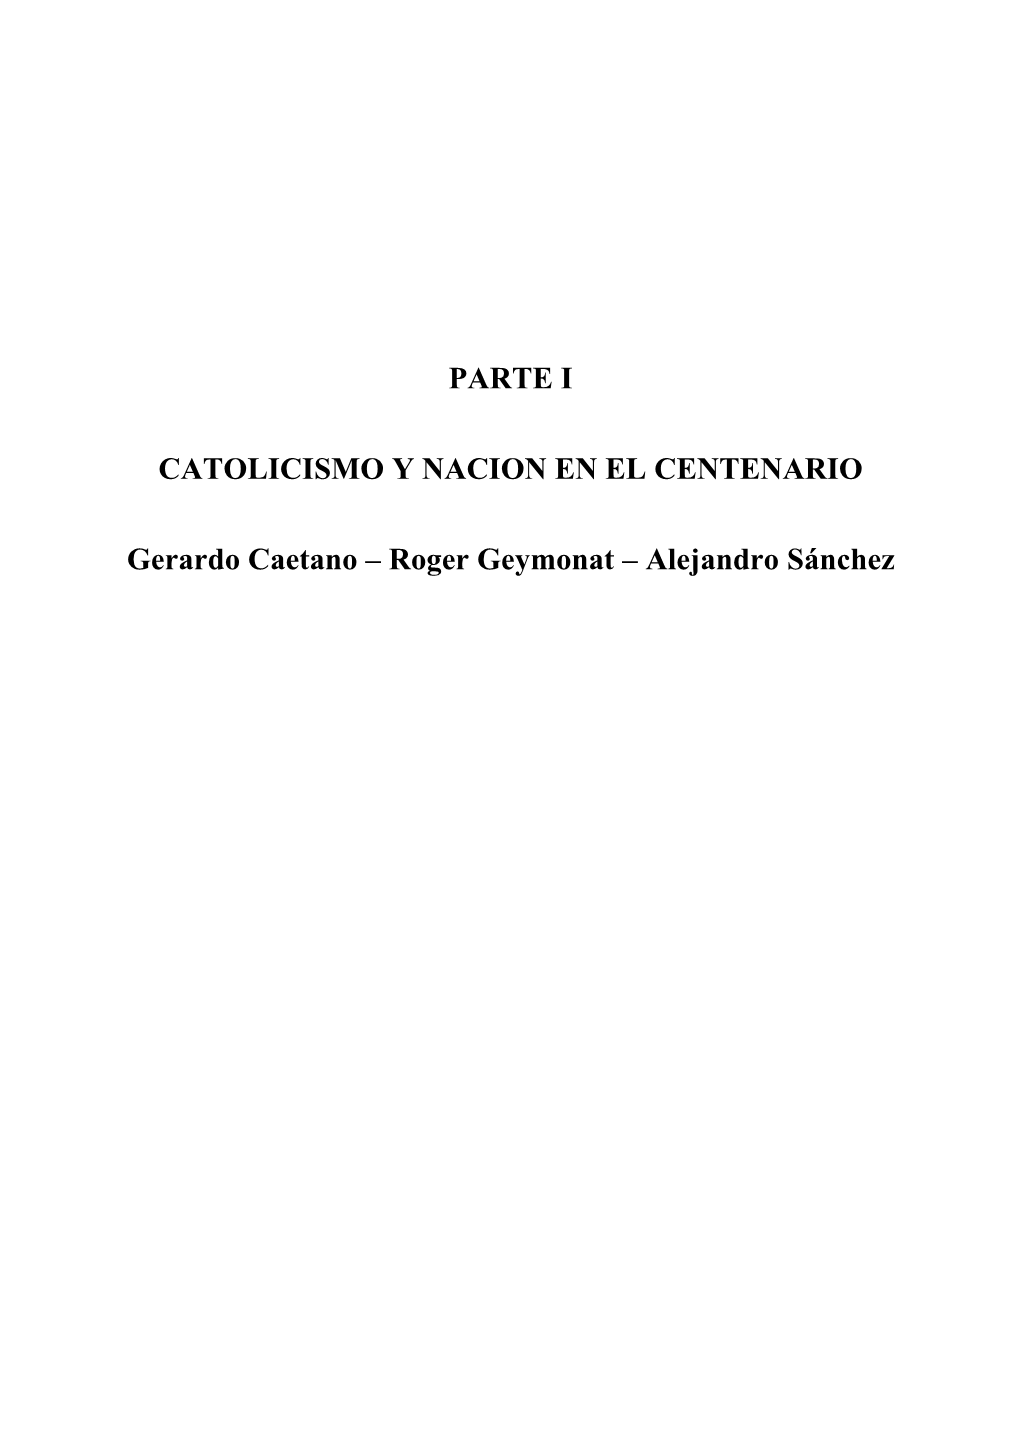 Caetano, G. Catolicismo.Pdf (2.913Mb)